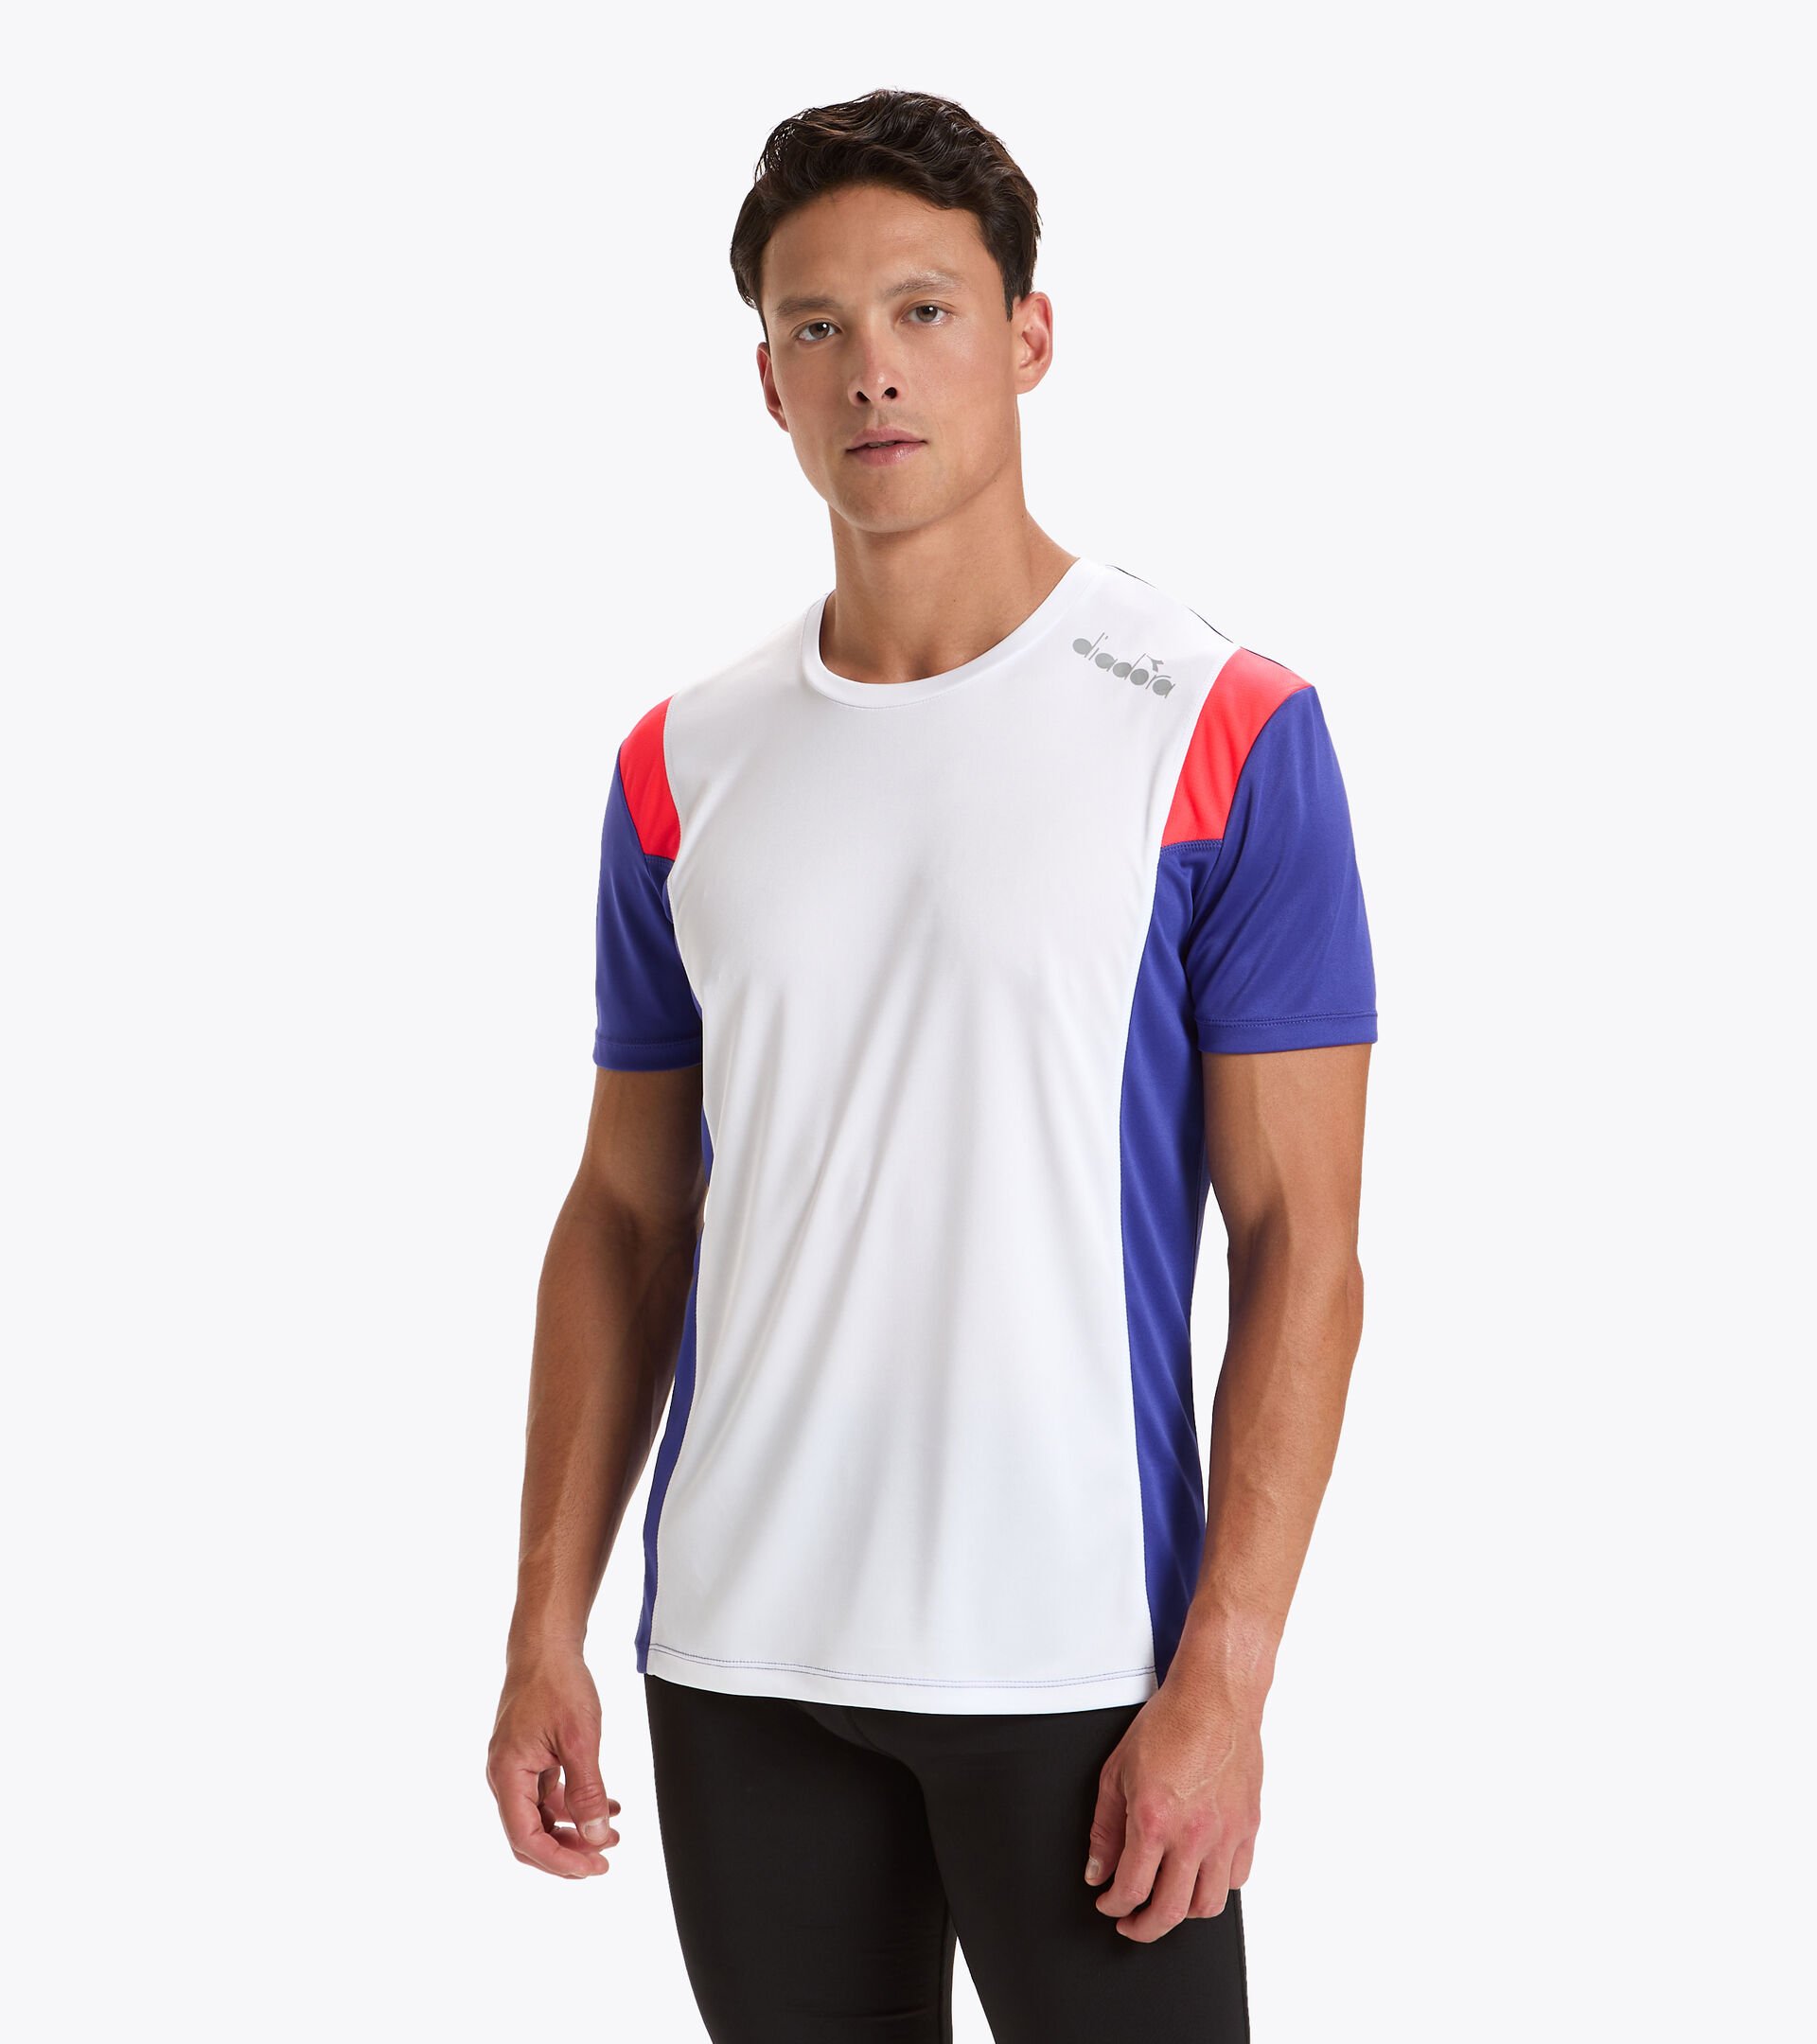 Erima running t-shirt corre camisa talla LSport fitness entrenamiento Shirt